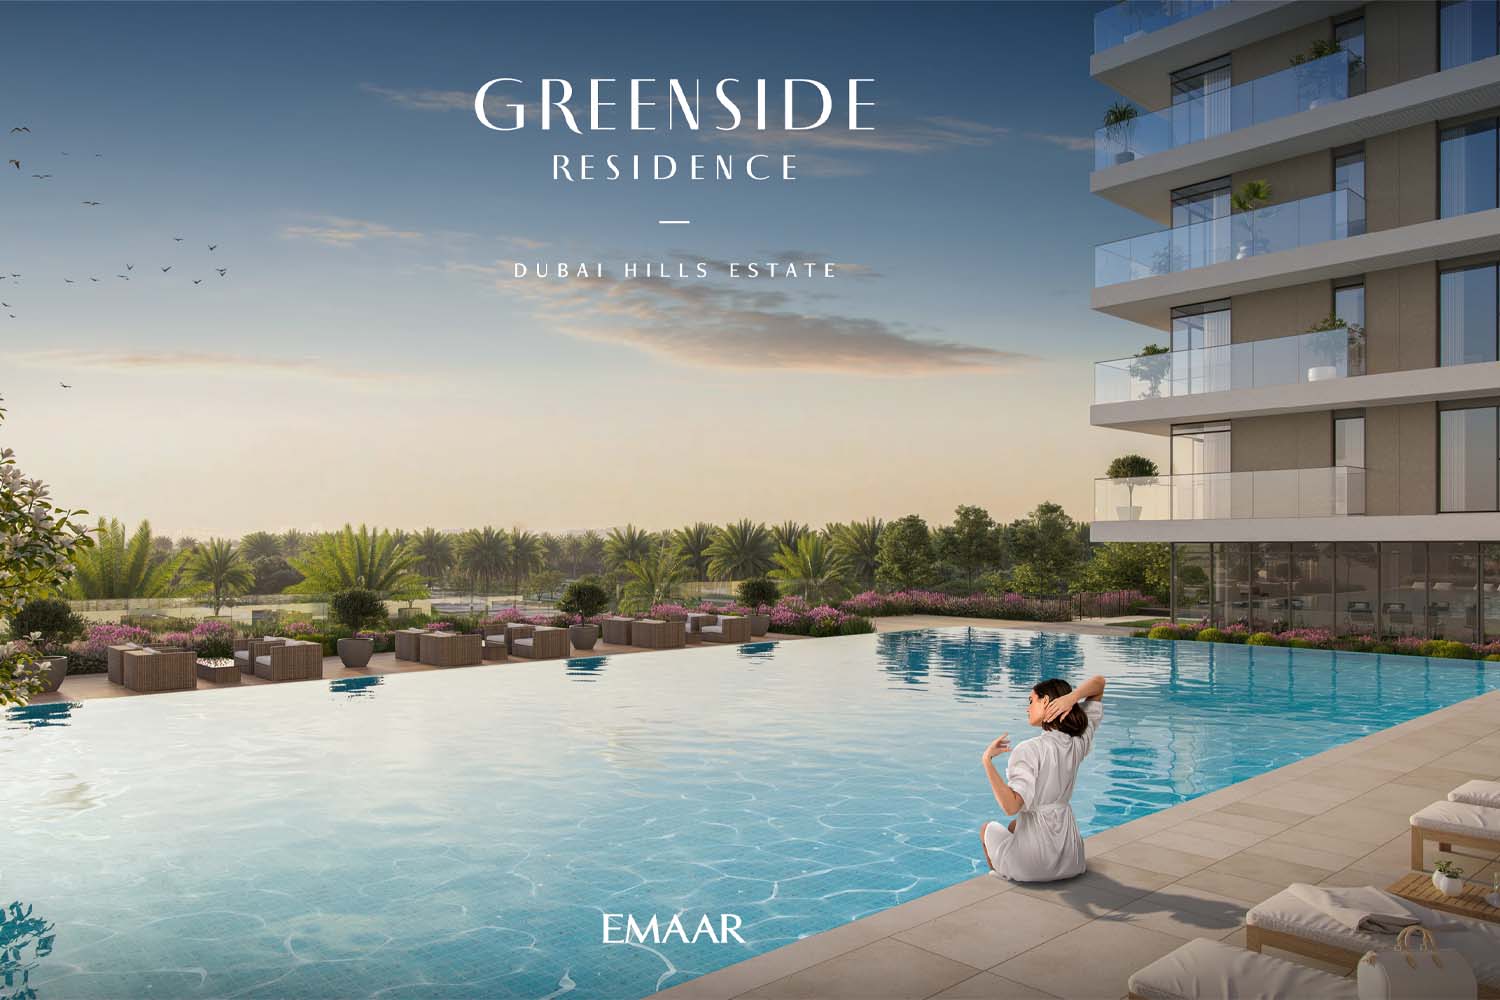 latest-project-in-dubai-greenside-residence-for-sale-in-dubai-hills-estate